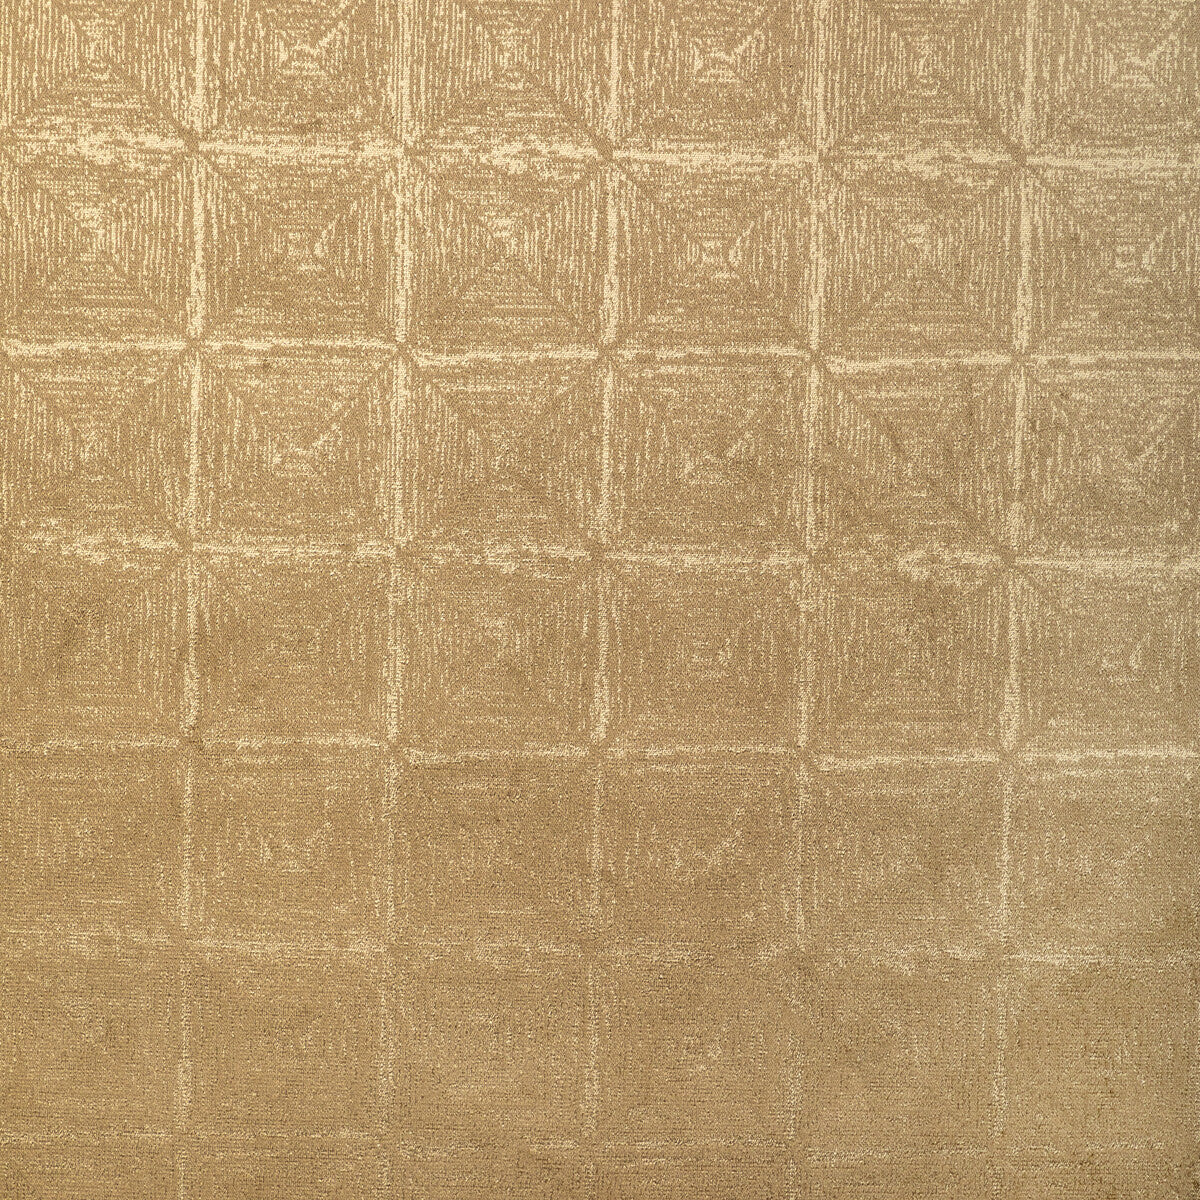 Illuminati fabric in inca color - pattern 36044.40.0 - by Kravet Contract